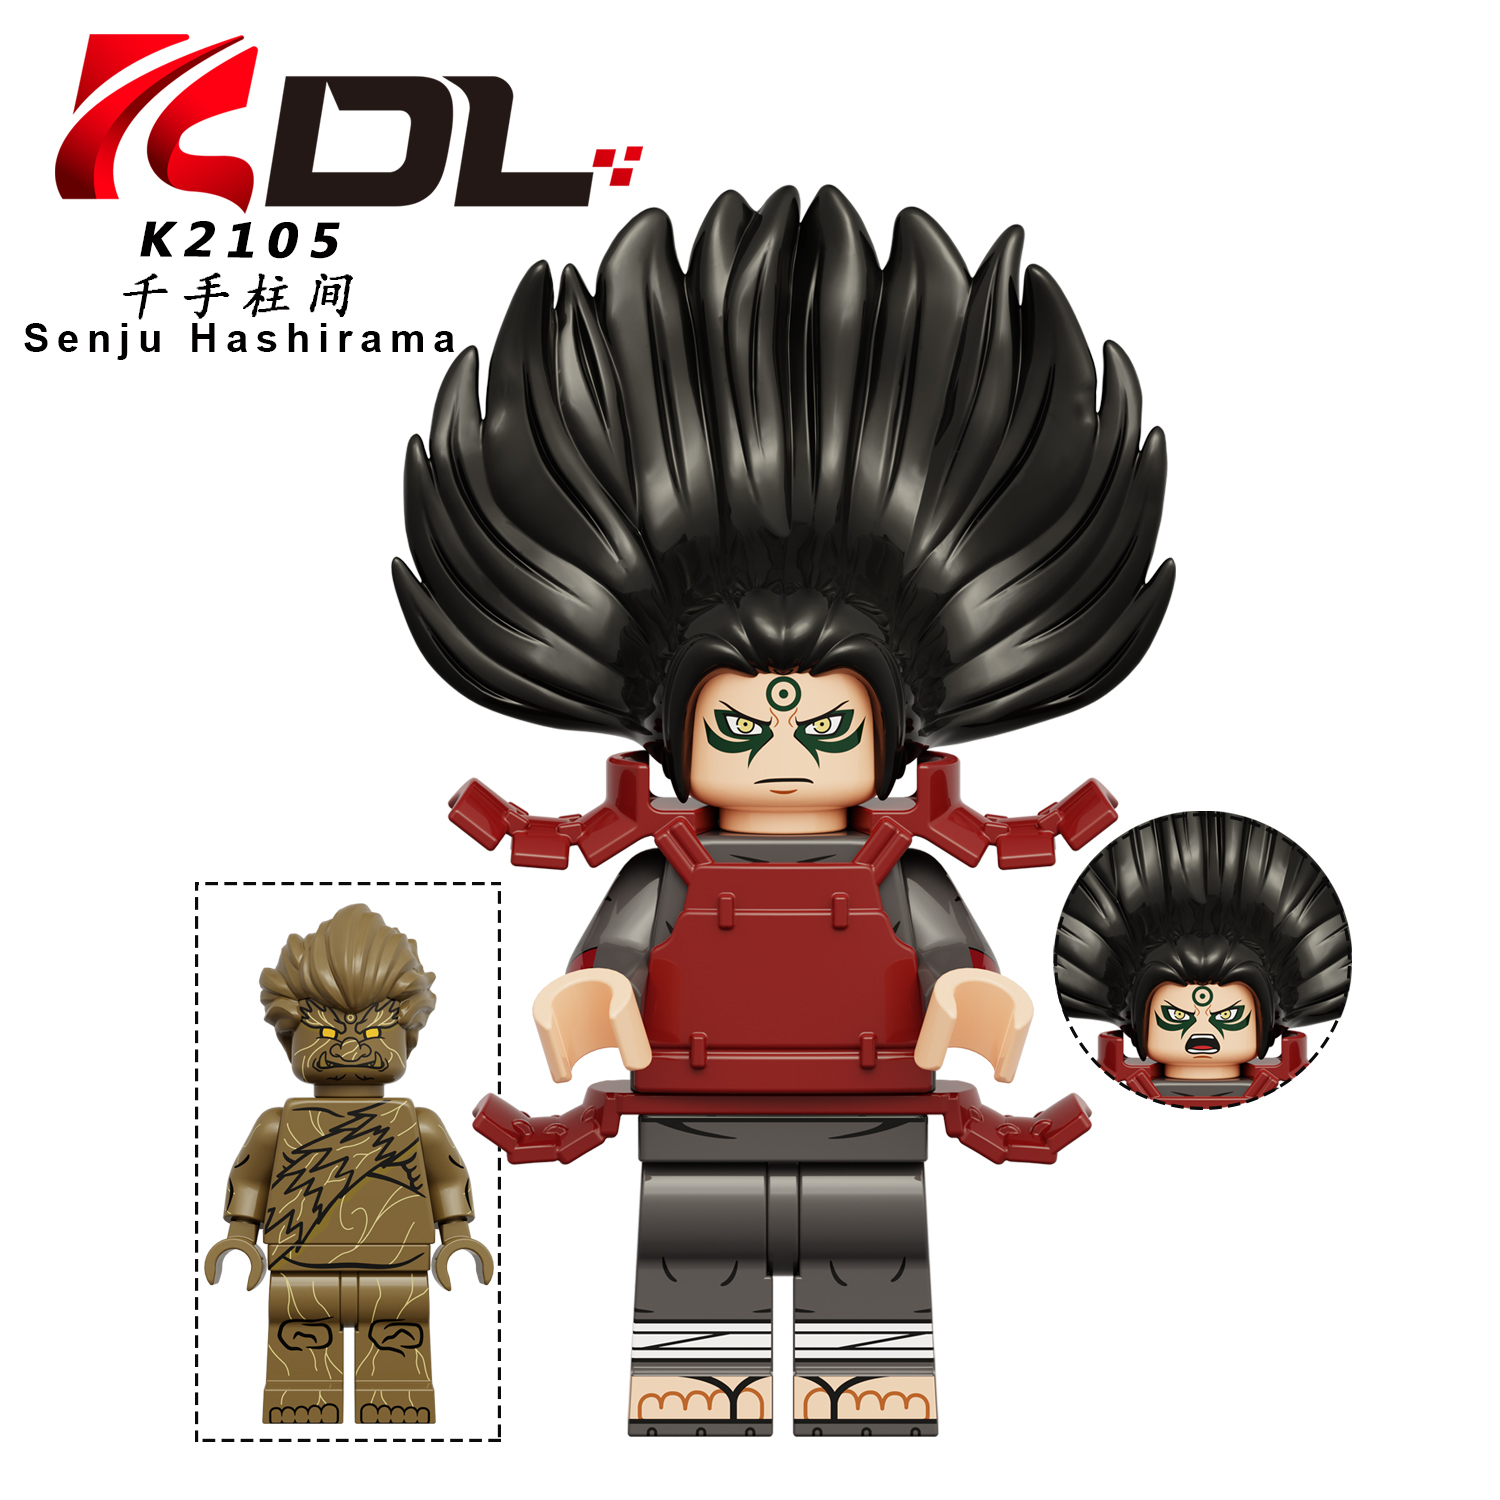 KDL814 K2103 K2104 K2105 K2106 K2107 K2108 K2109 K2110 Naruto Series Building Blocks Action Figures Educational Toys For Kids